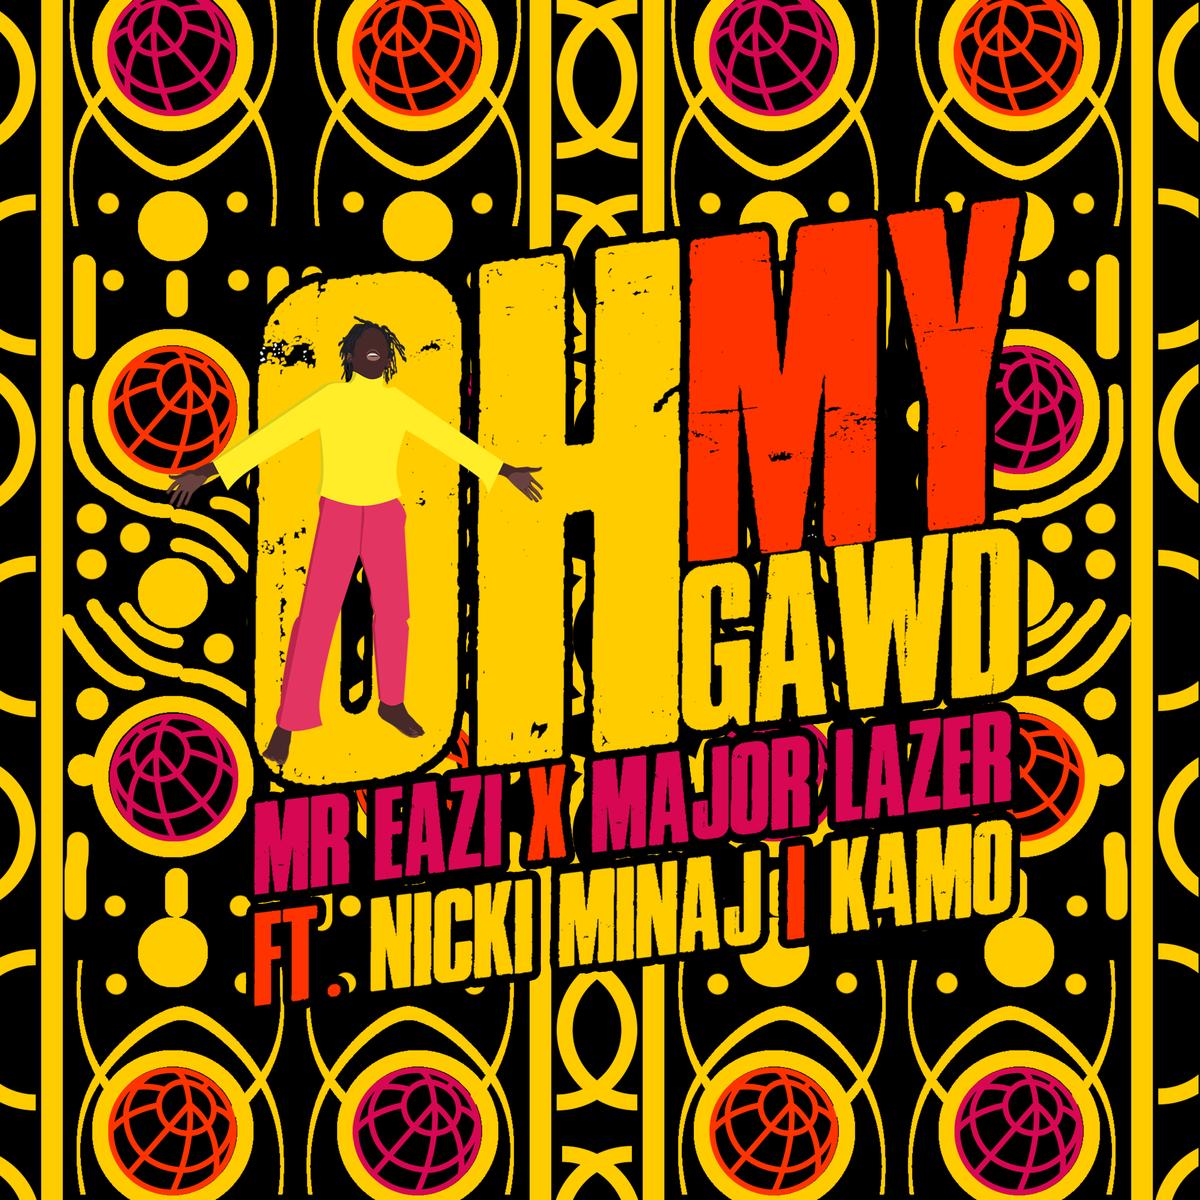 Mr Eazi & Major Lazer Call On Nicki Minaj & K4mo For “Oh My Gawd”